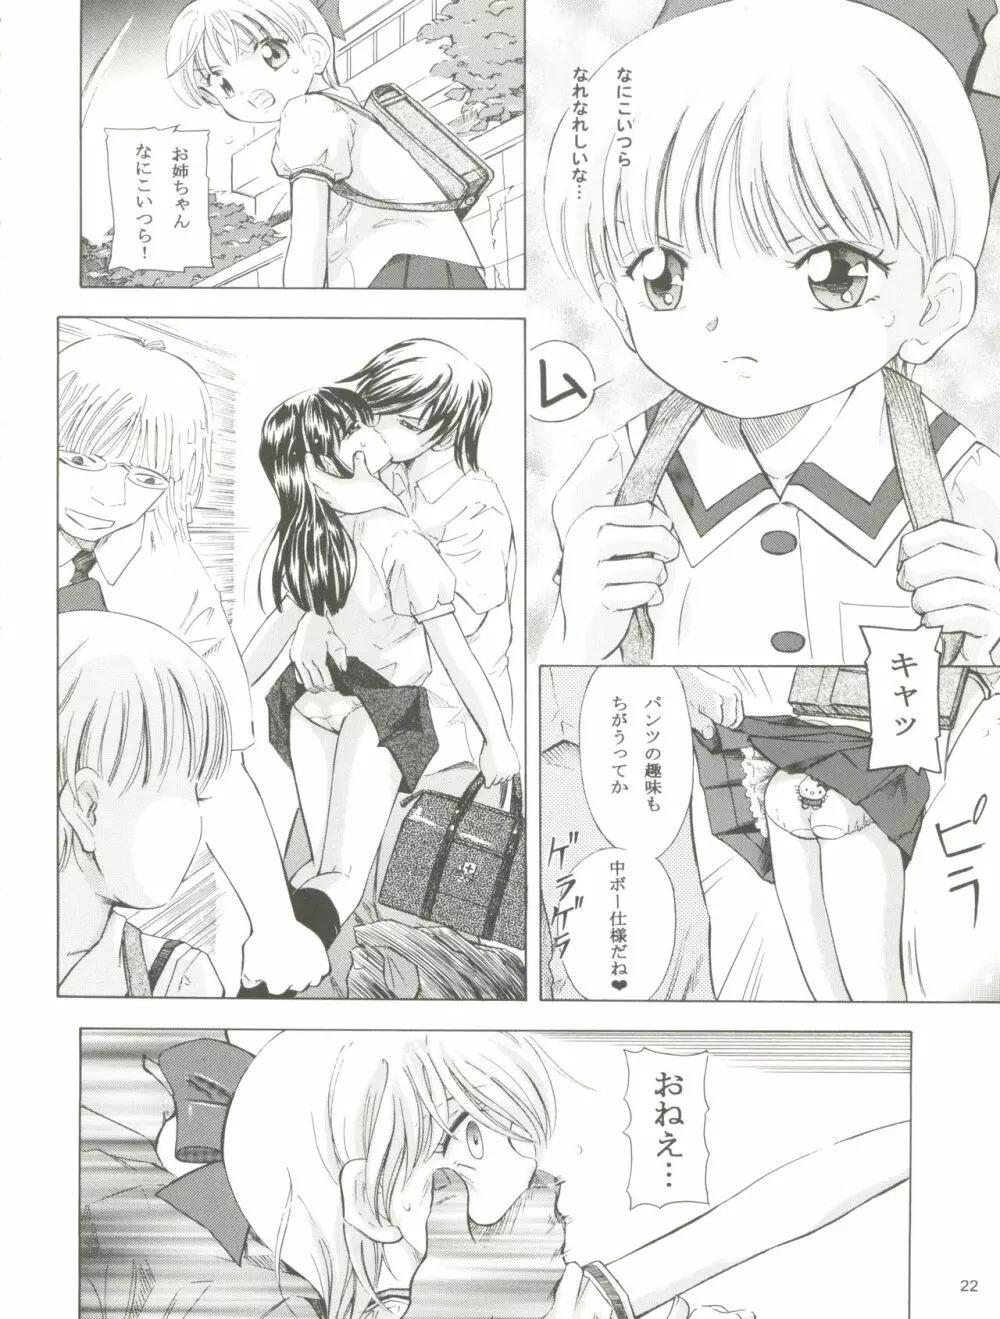 魔法旧式 17 魔女っ子丼! - page22